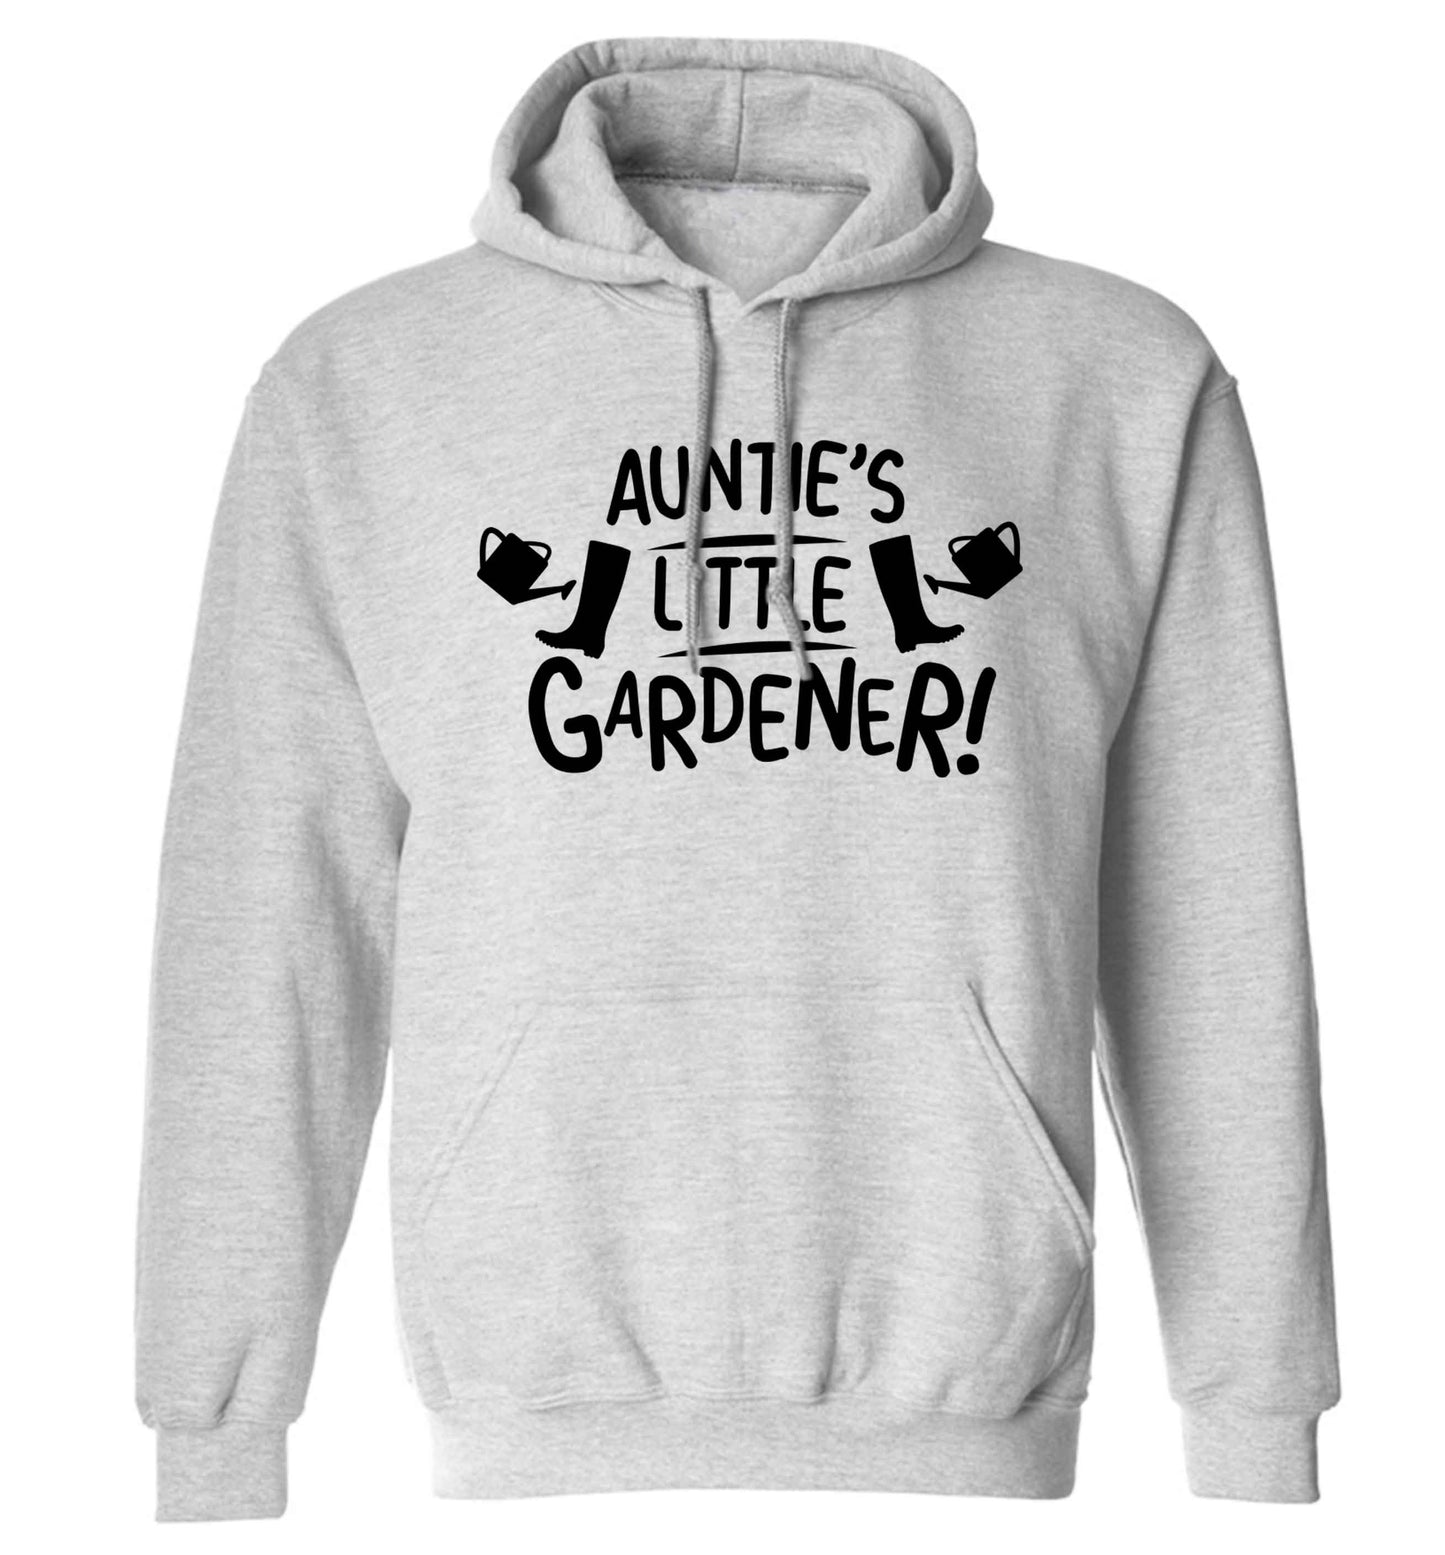 Auntie's little gardener adults unisex grey hoodie 2XL